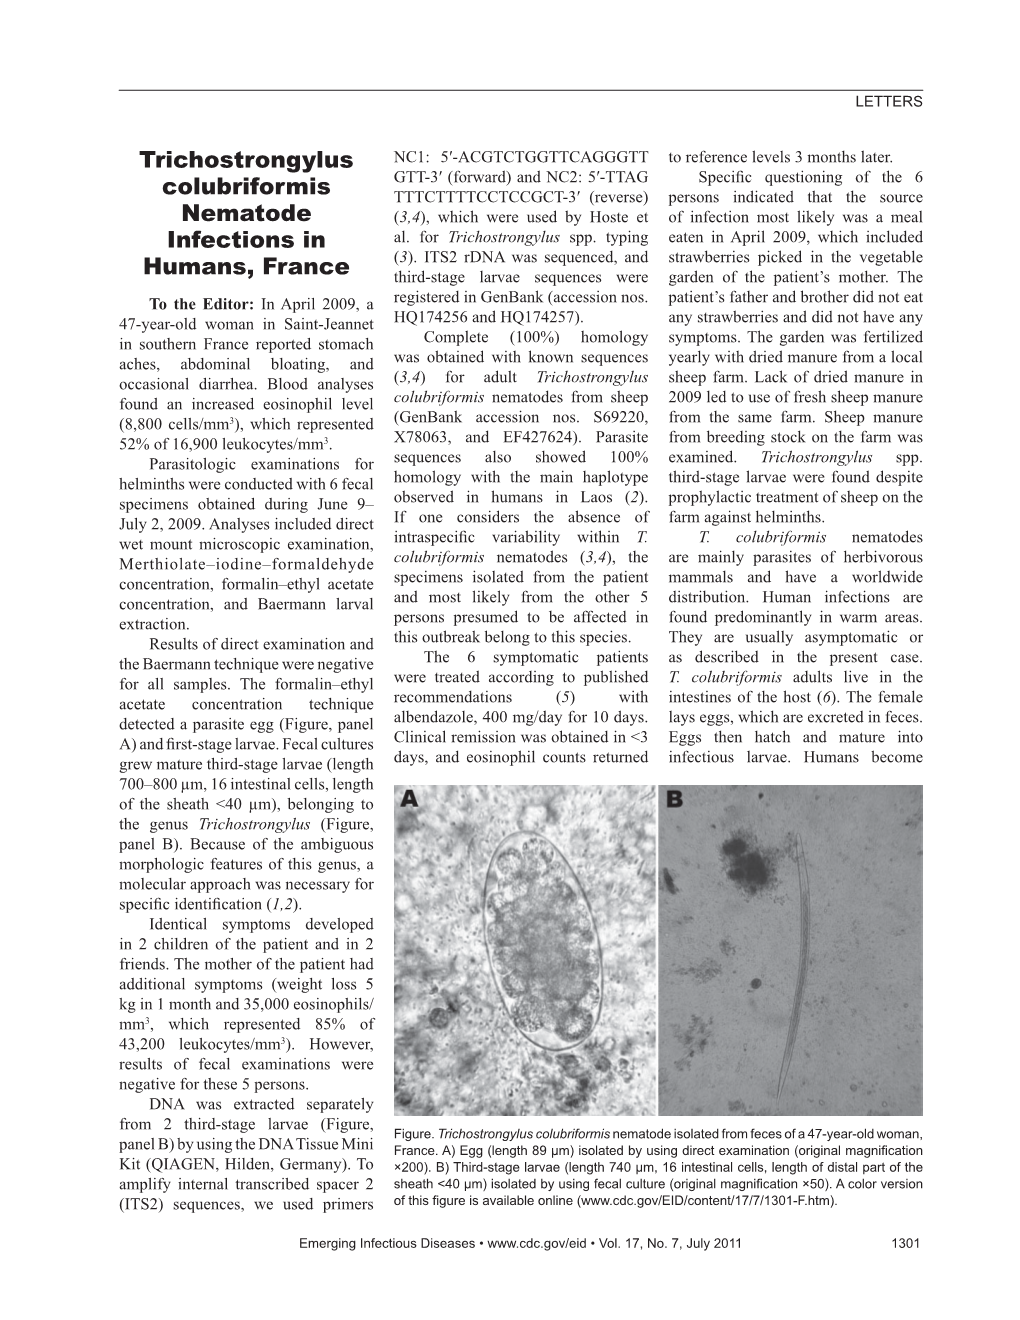 Trichostrongylus Colubriformis Nematode Infections in Humans